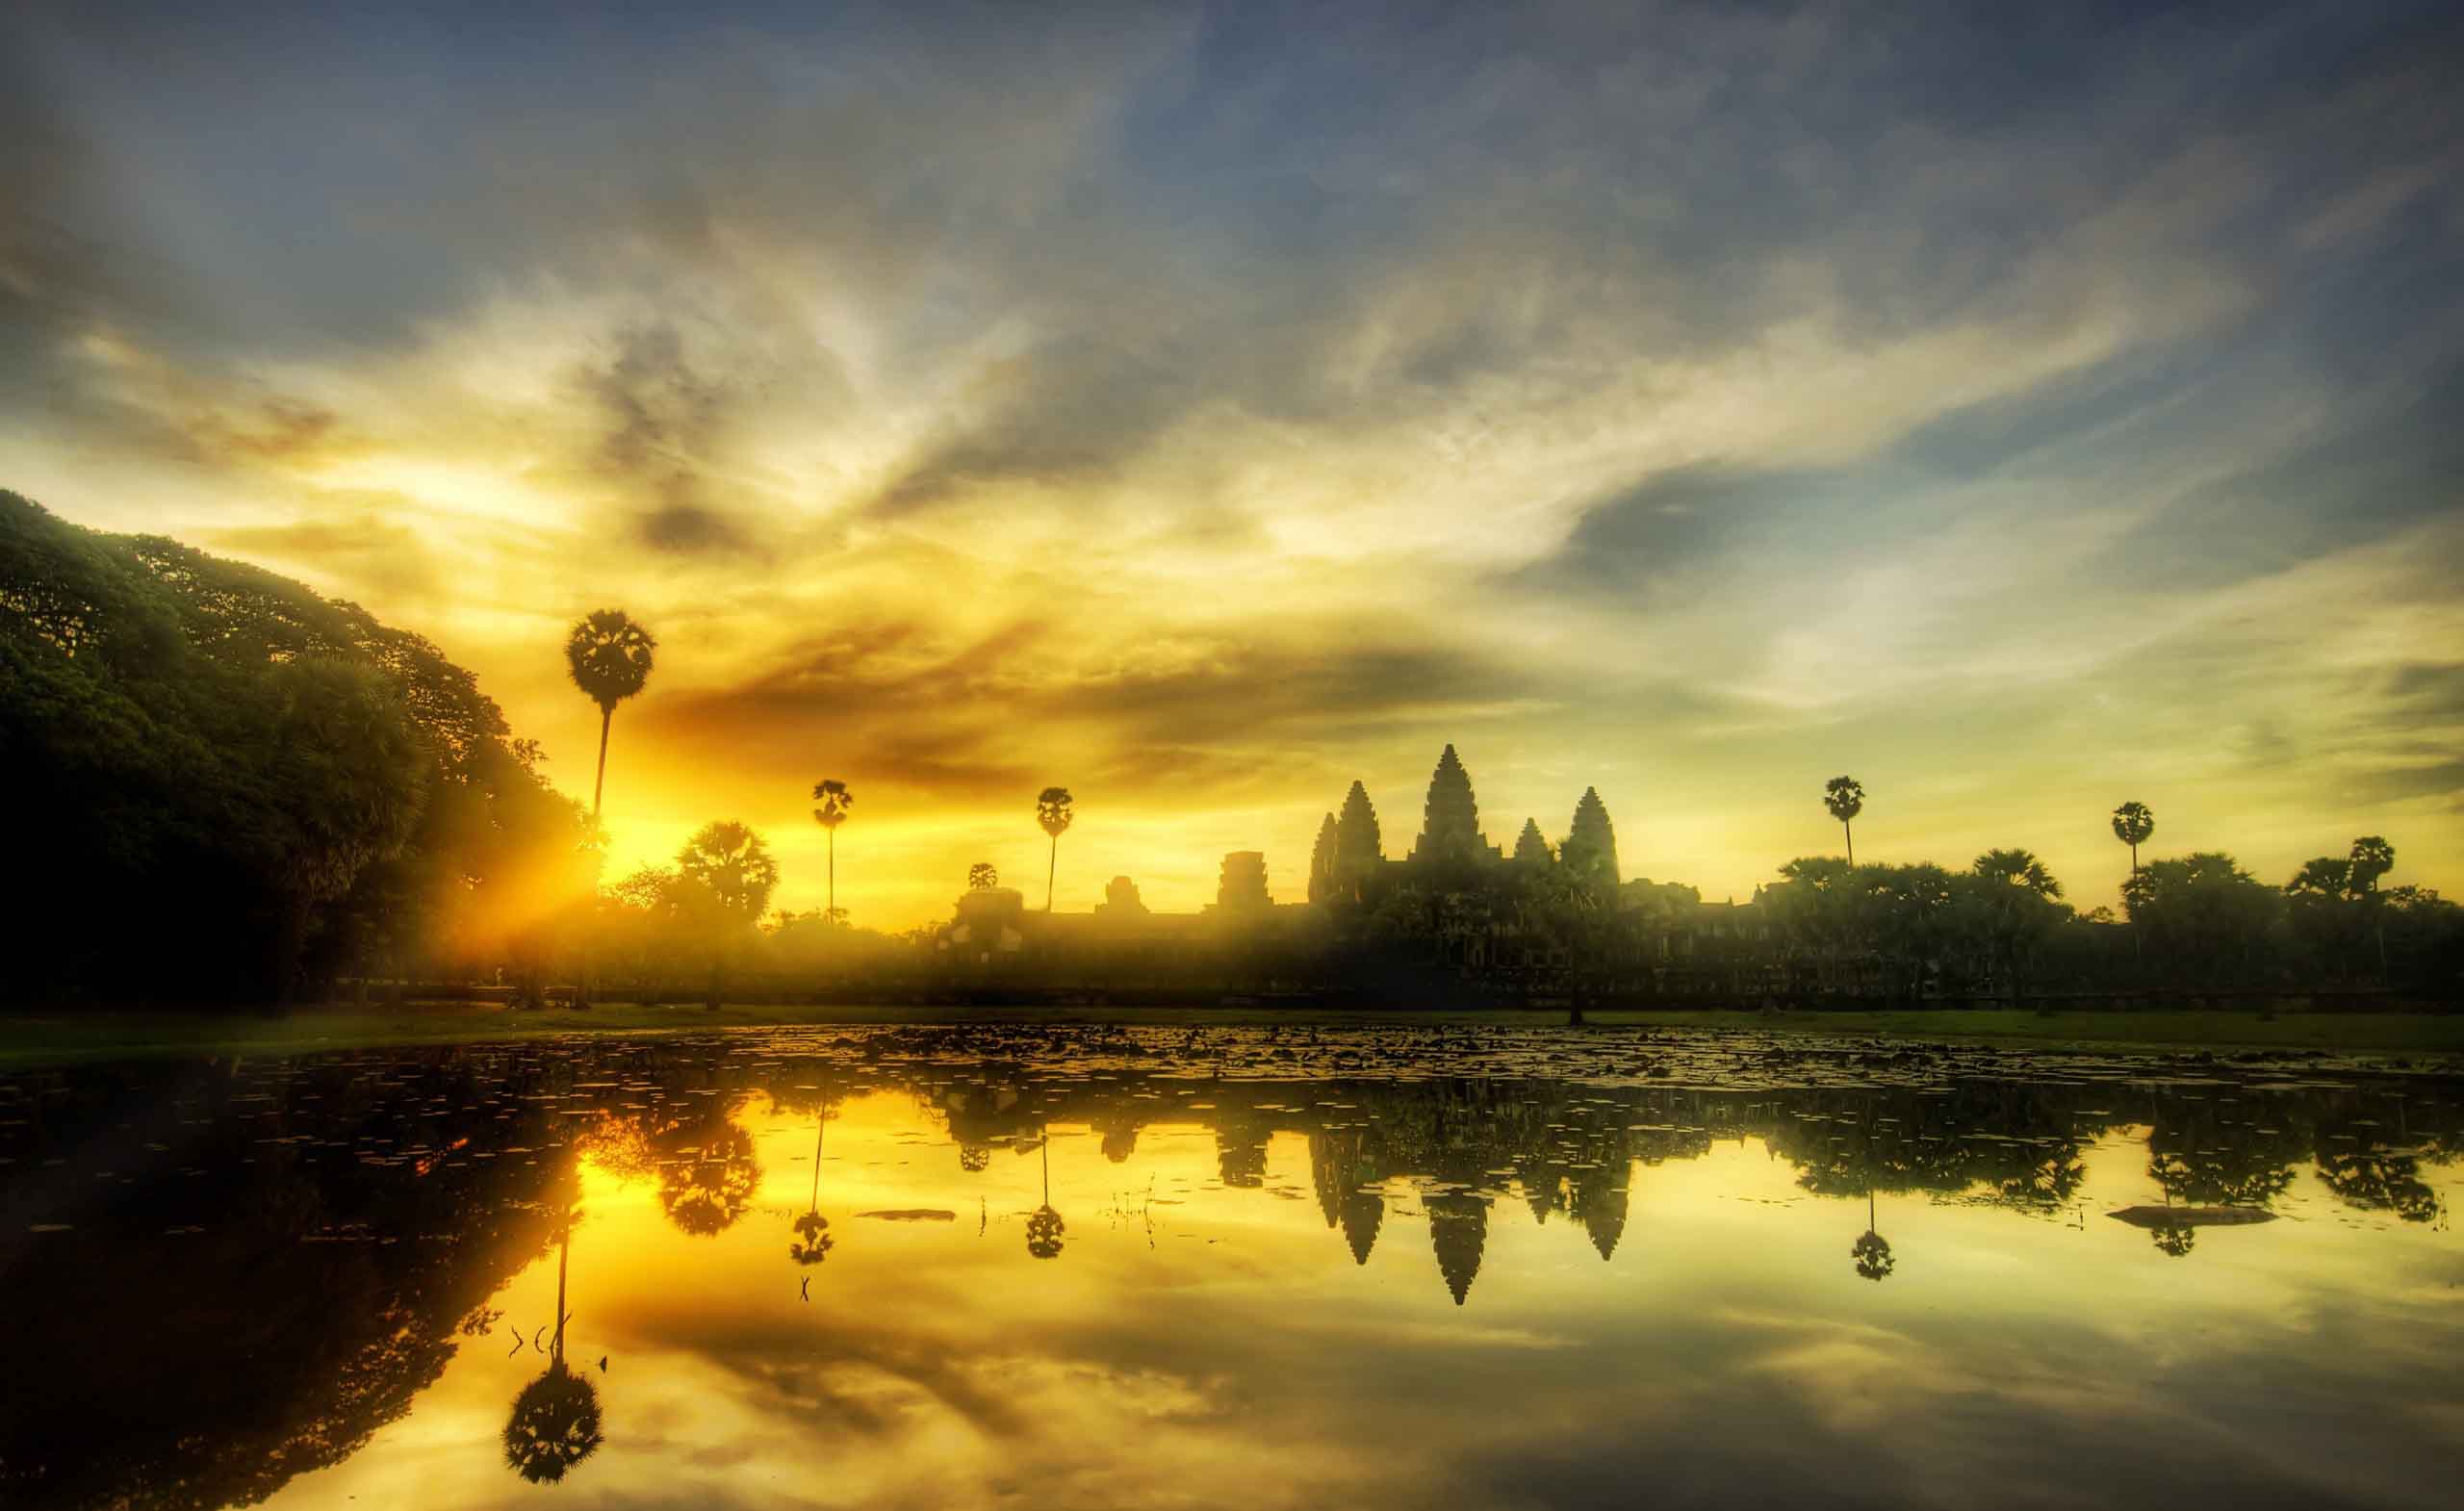 Angkor Wat Cambodia Siem Reap